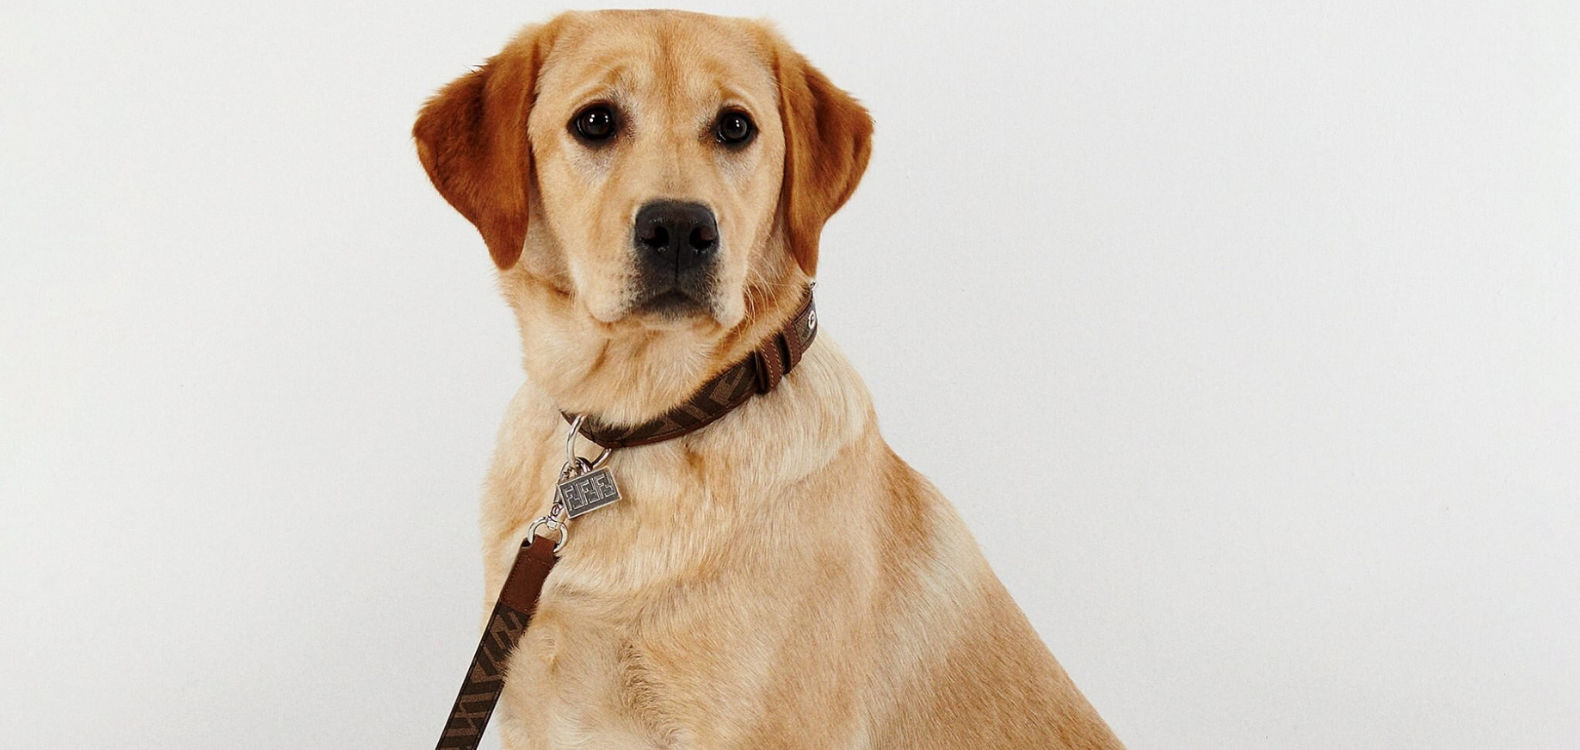 Staerough Dog Collarluxury Dog Collar Dogs Pets Made in 